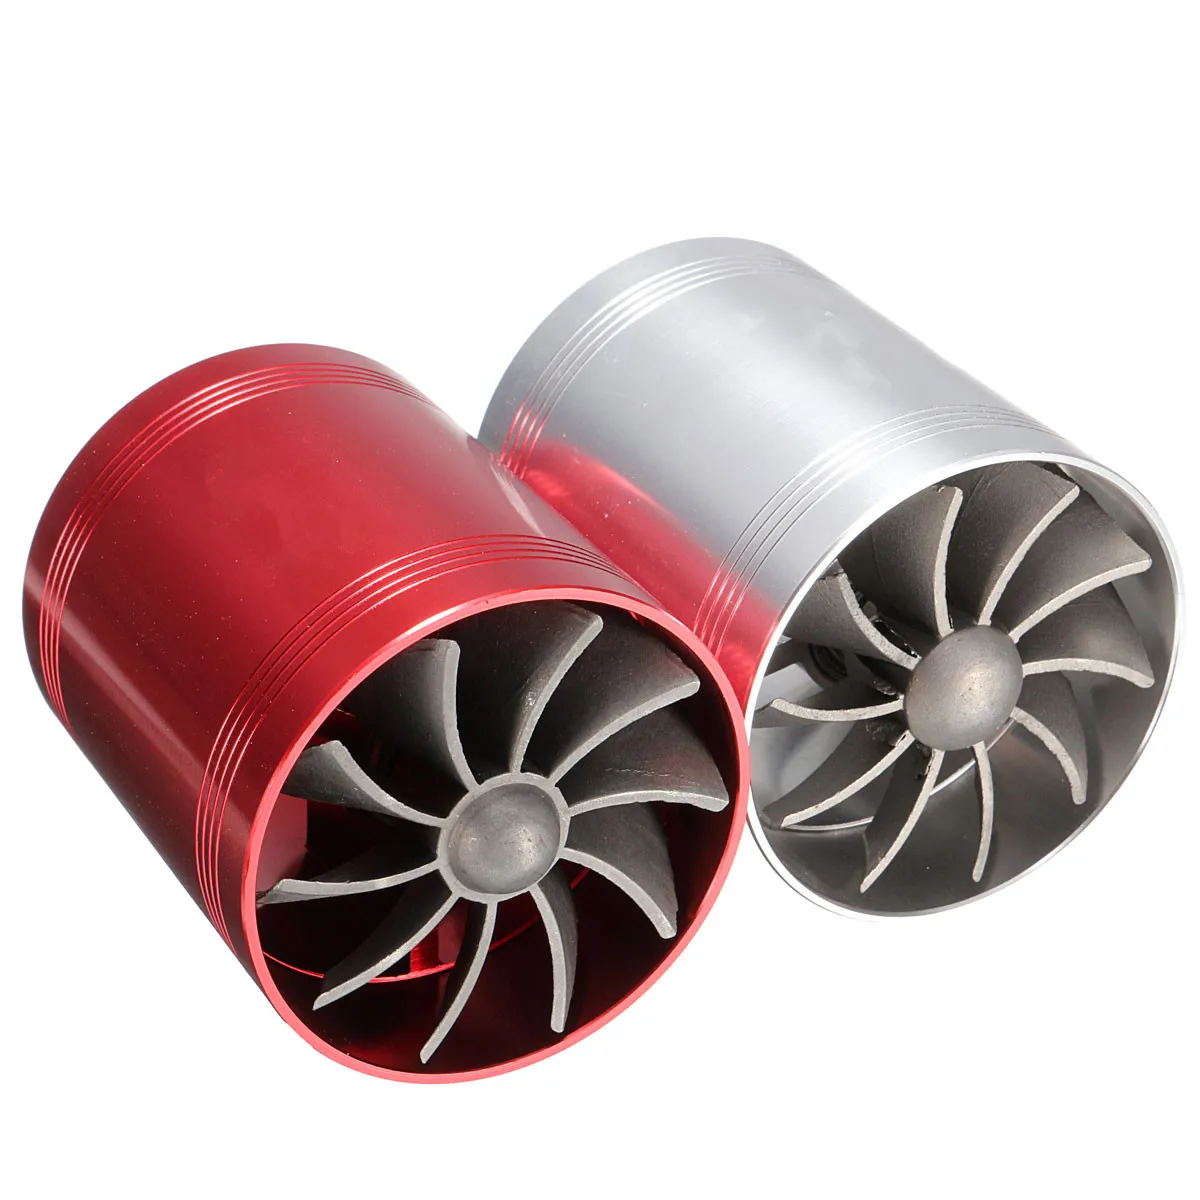 

68mm x 56m Car Turbo Supercharger Charger Turbocharger Air Filter Intake Dual Fan Fuel Gas Saver Turbonator For Turbine MV77942B